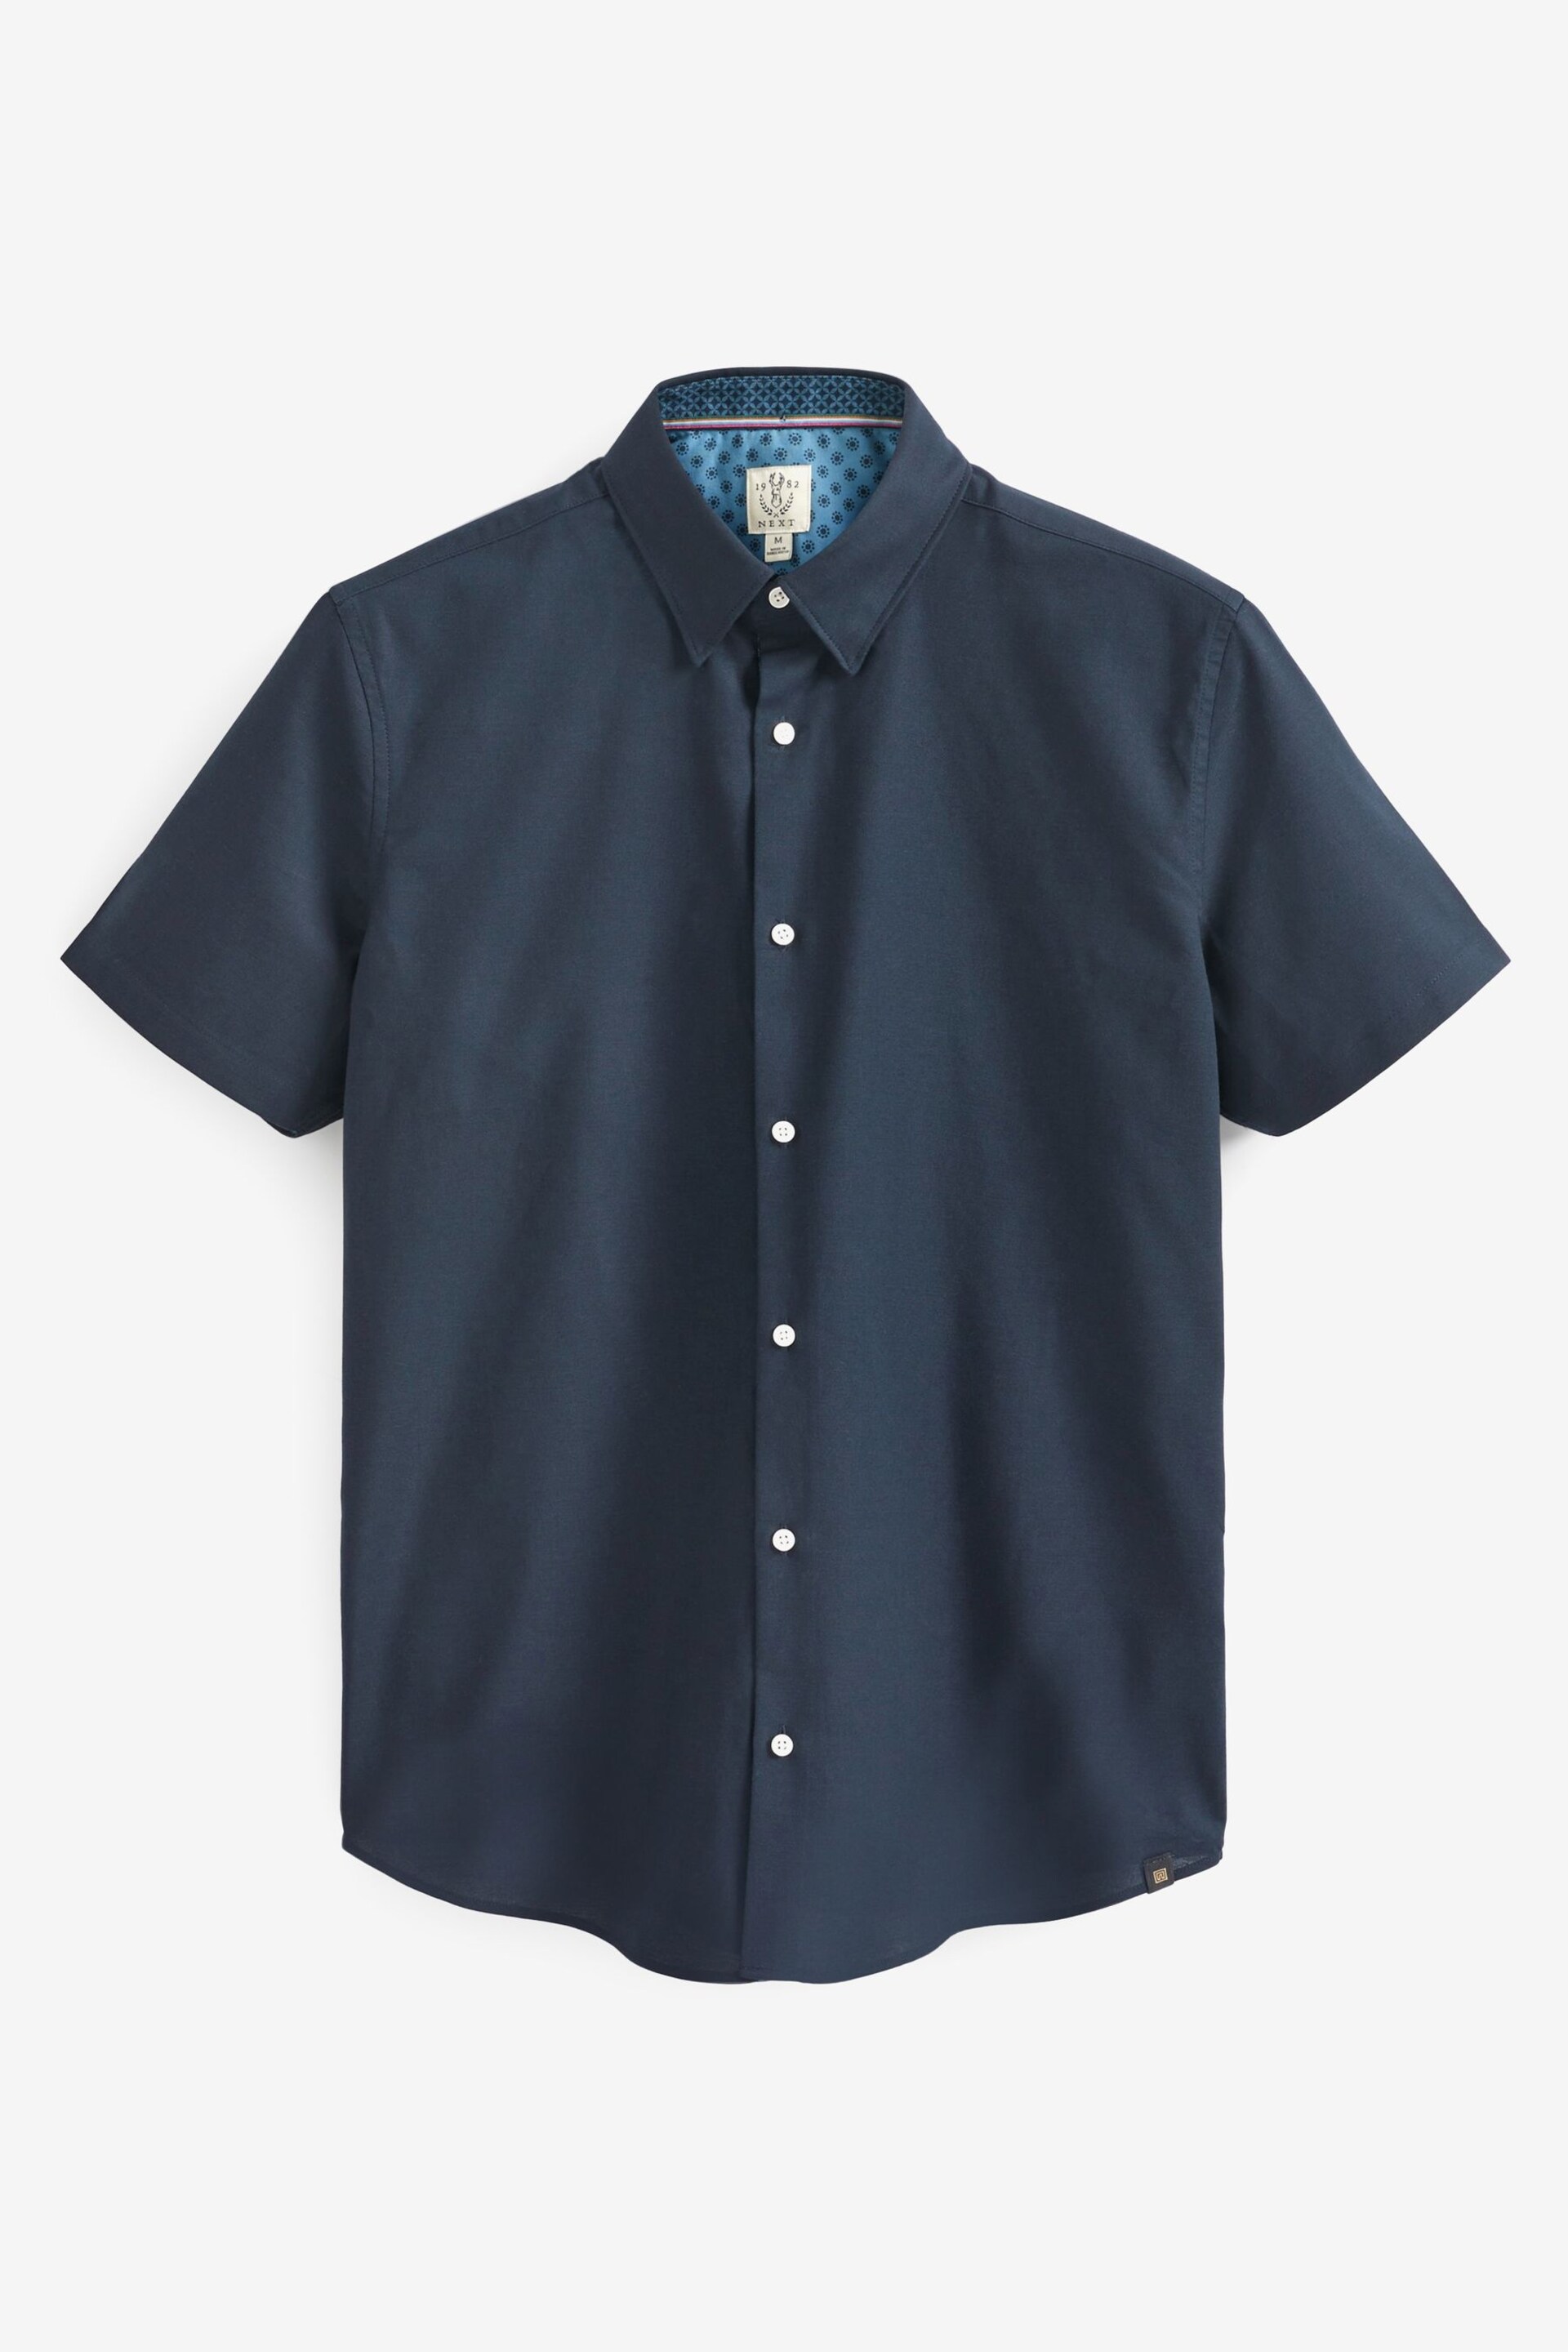 Navy Blue Stretch Oxford Short Sleeve Shirt - Image 5 of 7